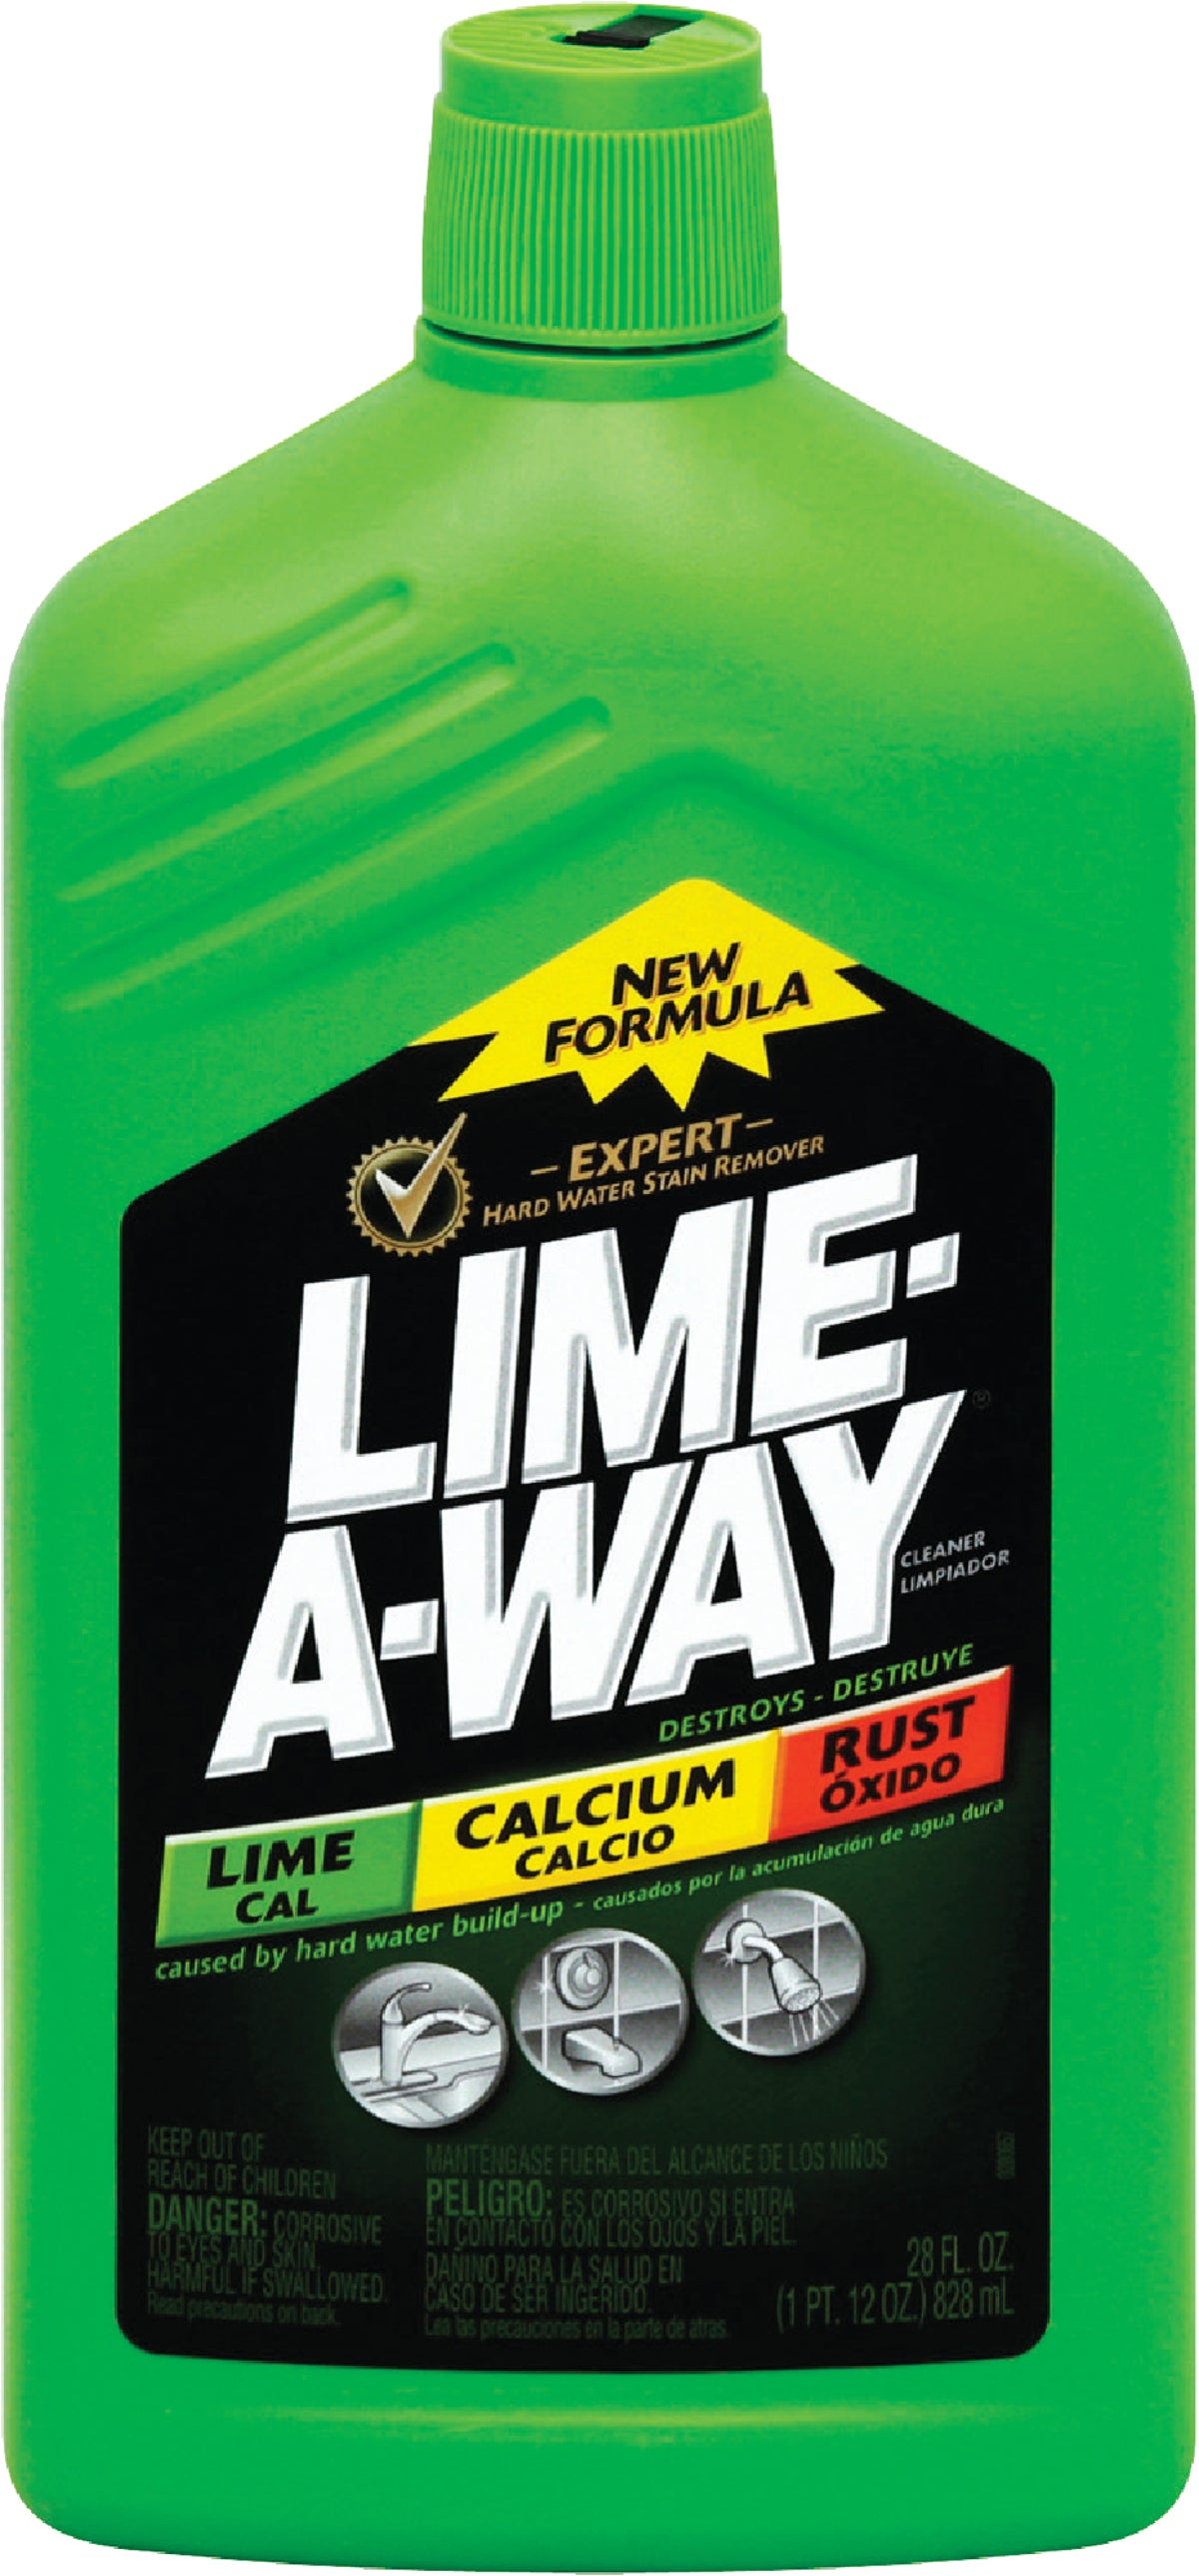 Lime-A-Way Cleaner, Turbo Foam - 32 fl oz